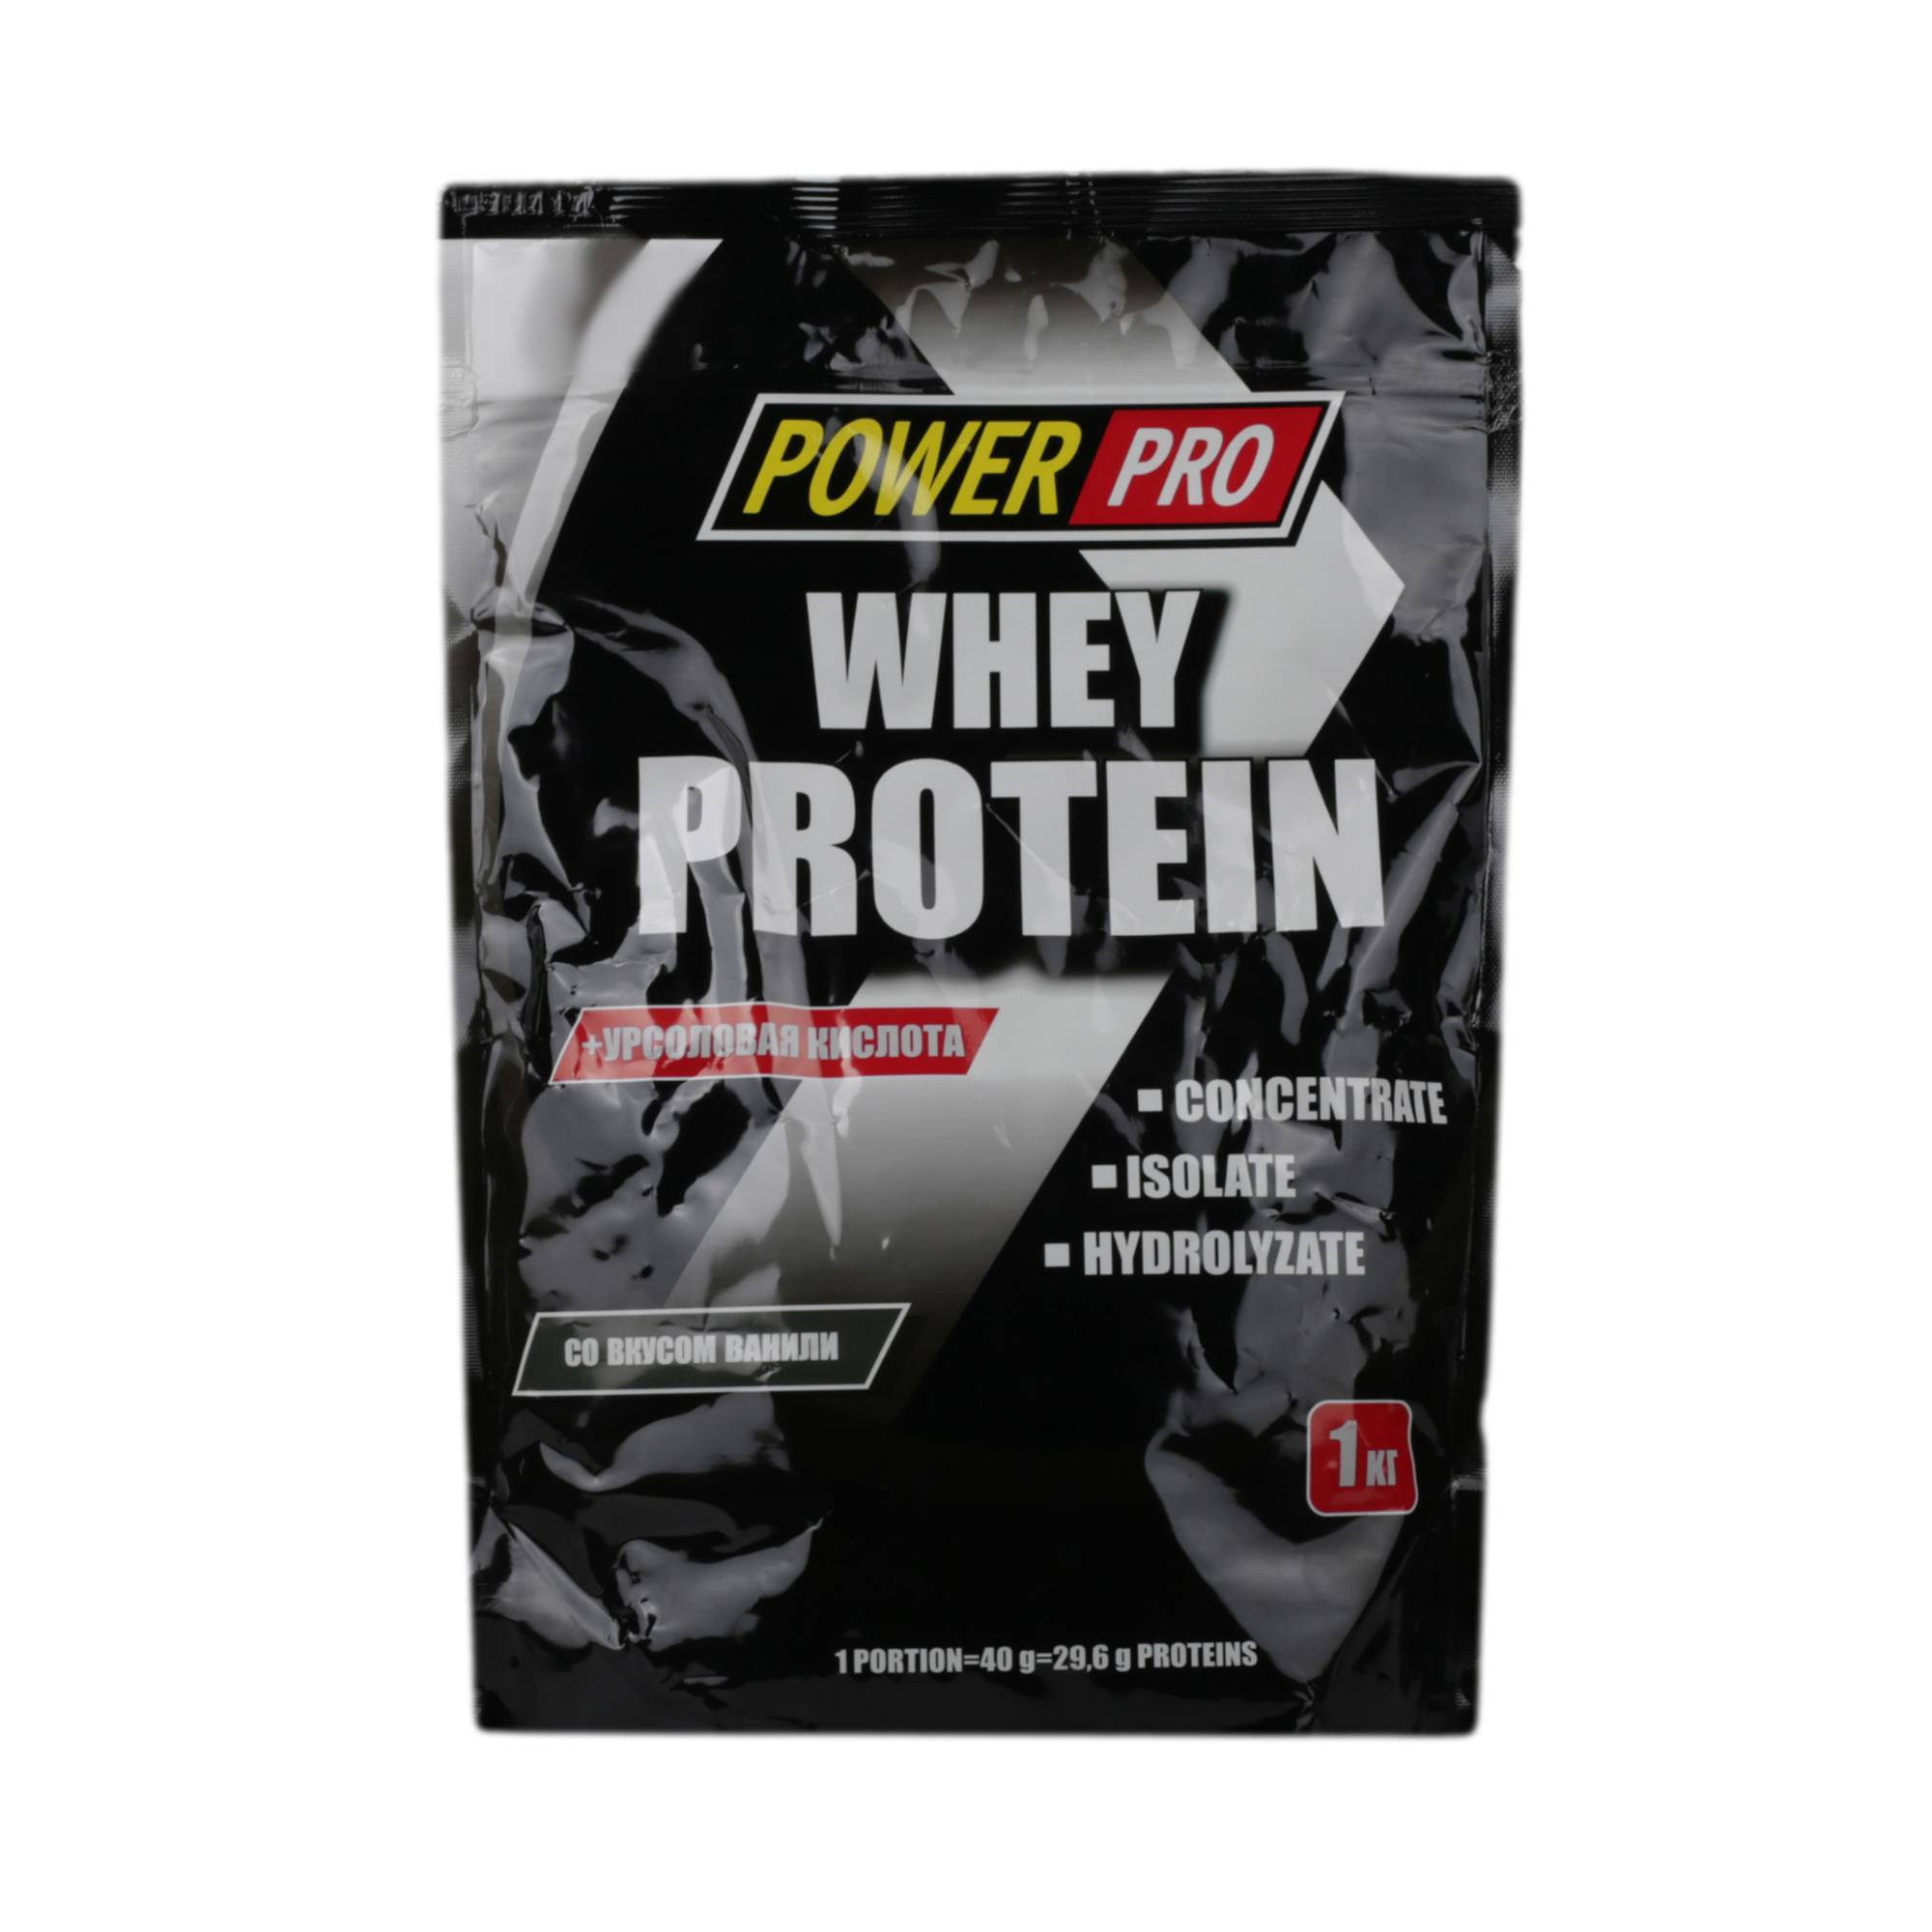 Отличный протеин - отзывы о whey protein power pro